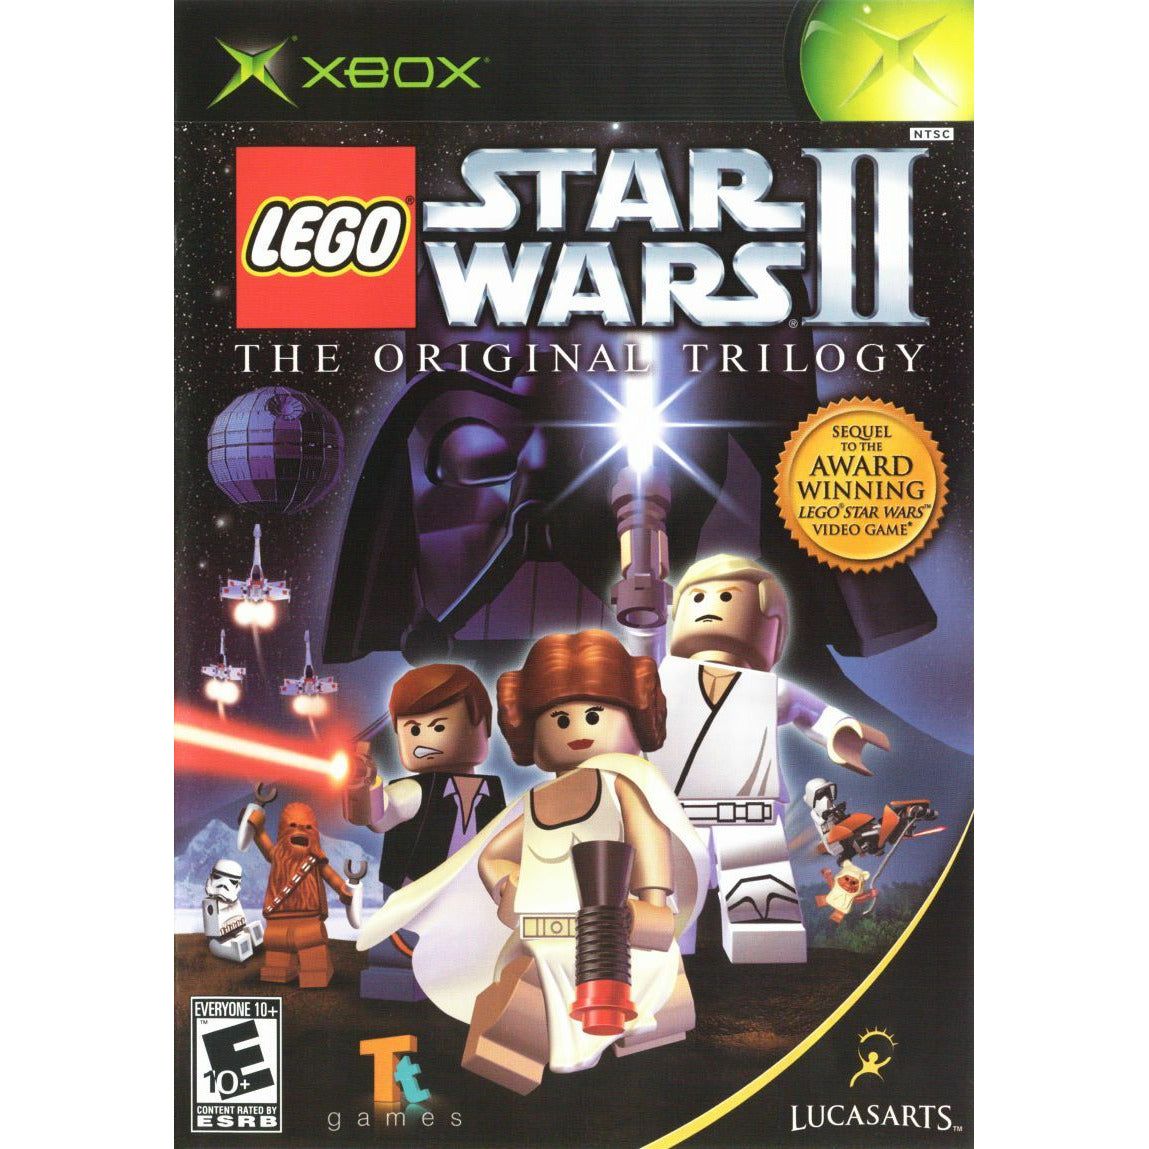 XBOX - Lego Star Wars II La trilogie originale (Hits Platine) (Scellé)